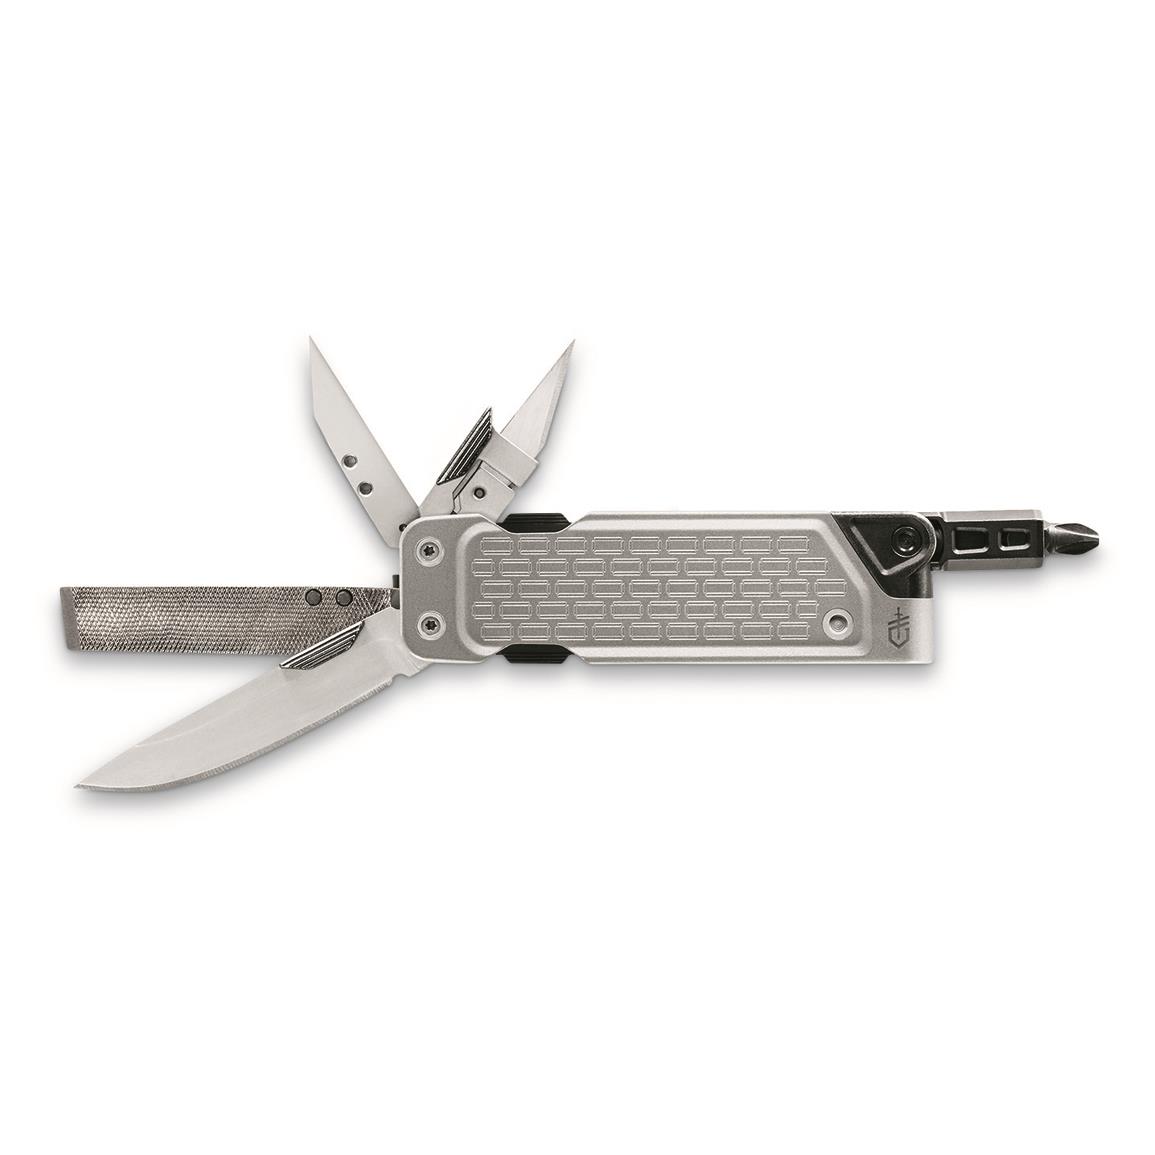 Work Sharp Micro Manual Knife Sharpener Tool - 714309, Knife Sharpeners ...